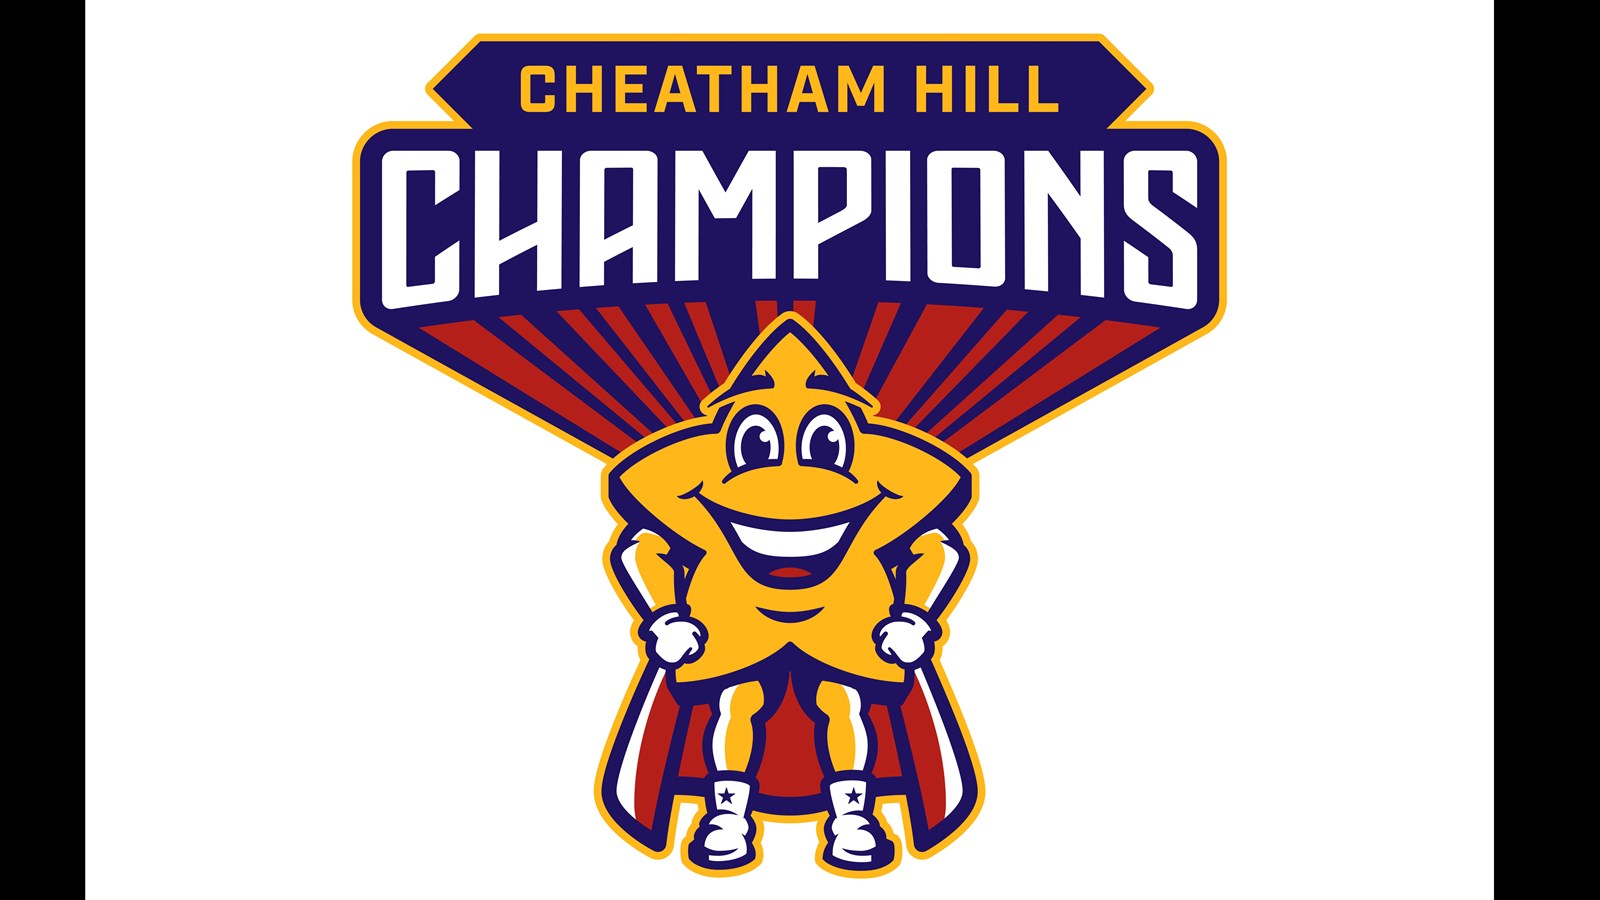 Cheatham Hill Champions